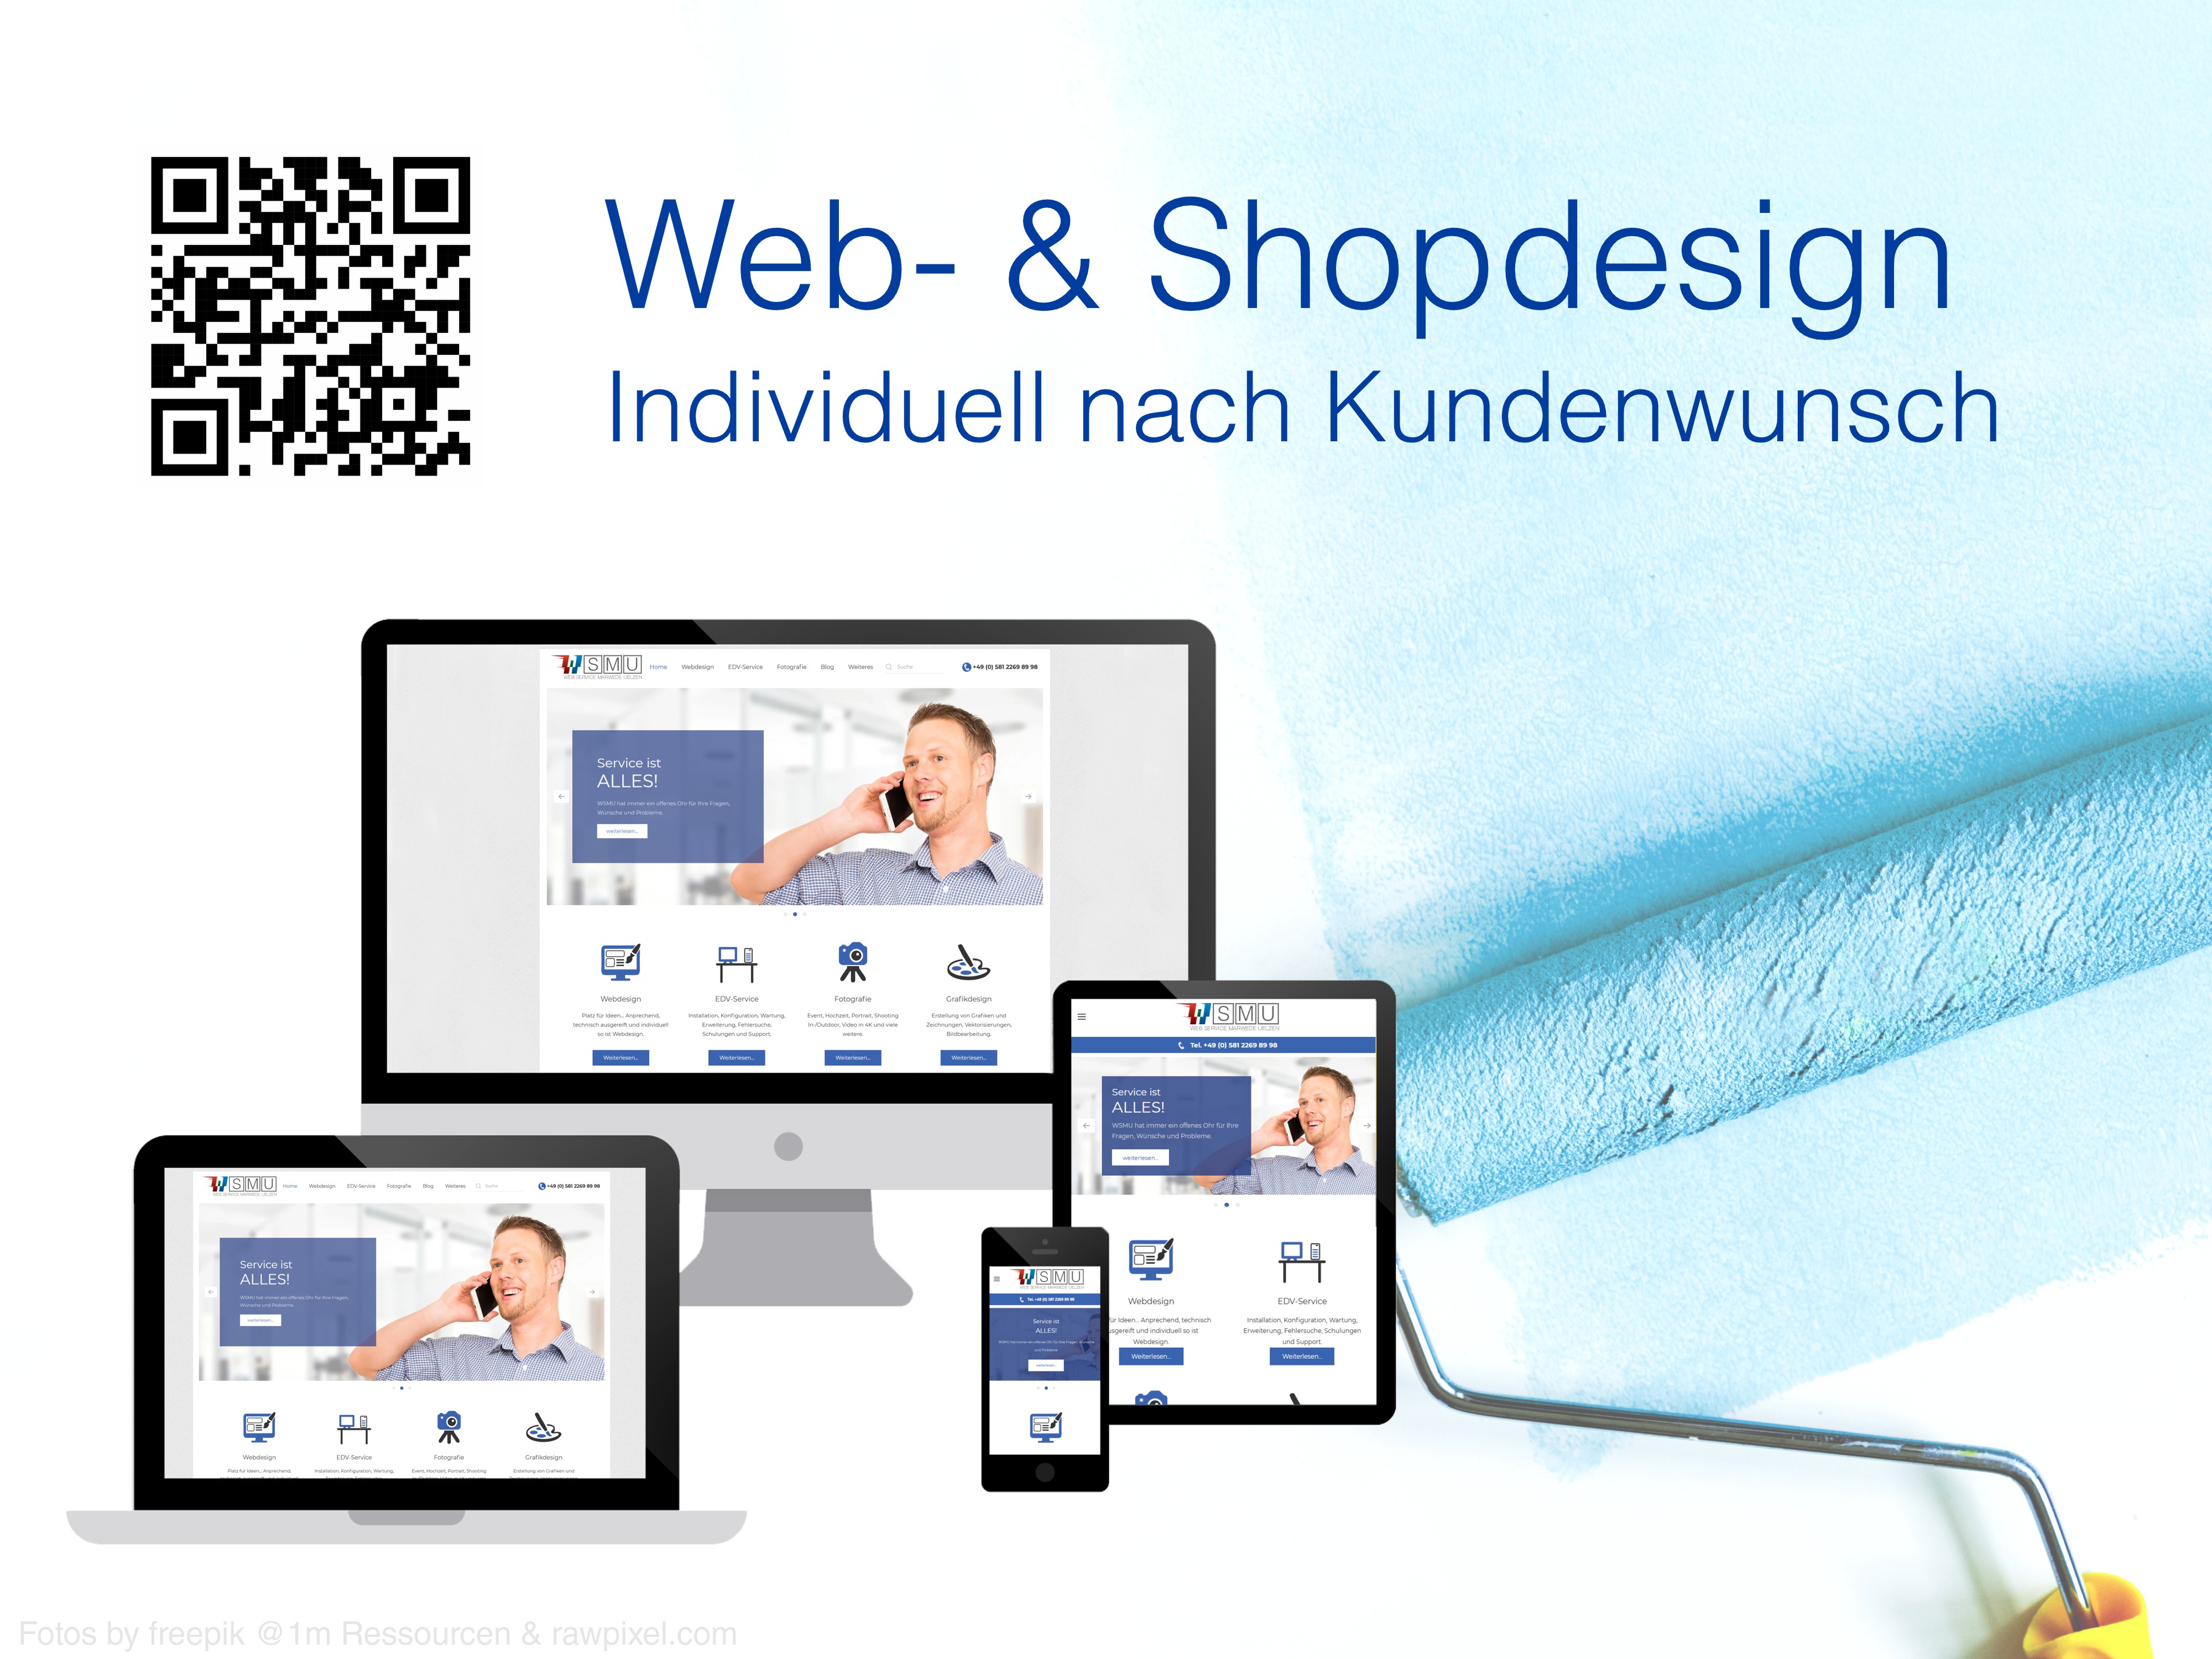 Webdesign.jpg – WSMU | Stefan Marwede